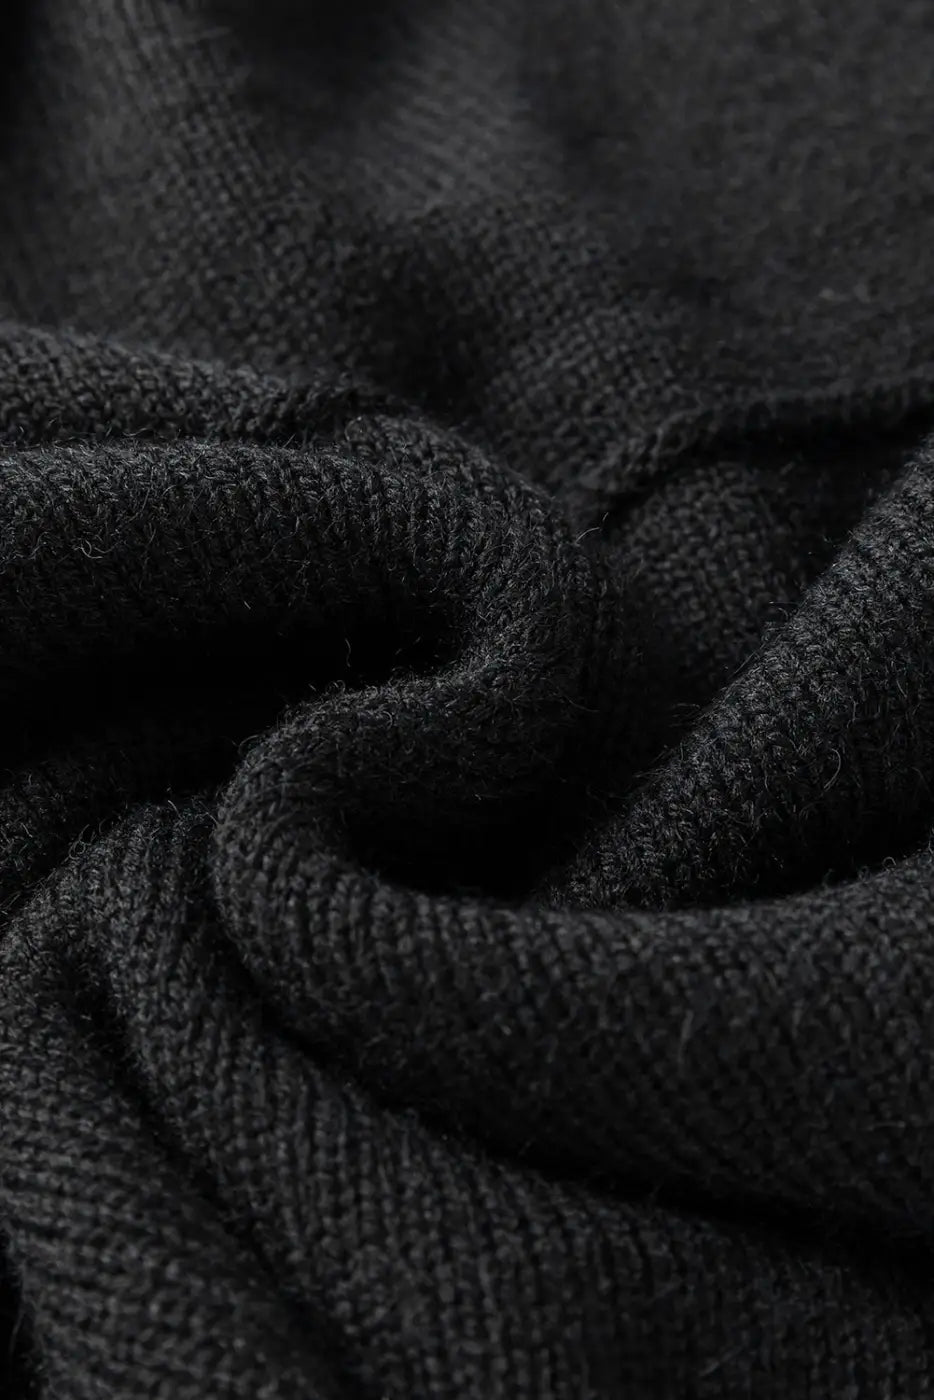 Medium grey mock neck batwing short sleeve knit sweater - tops